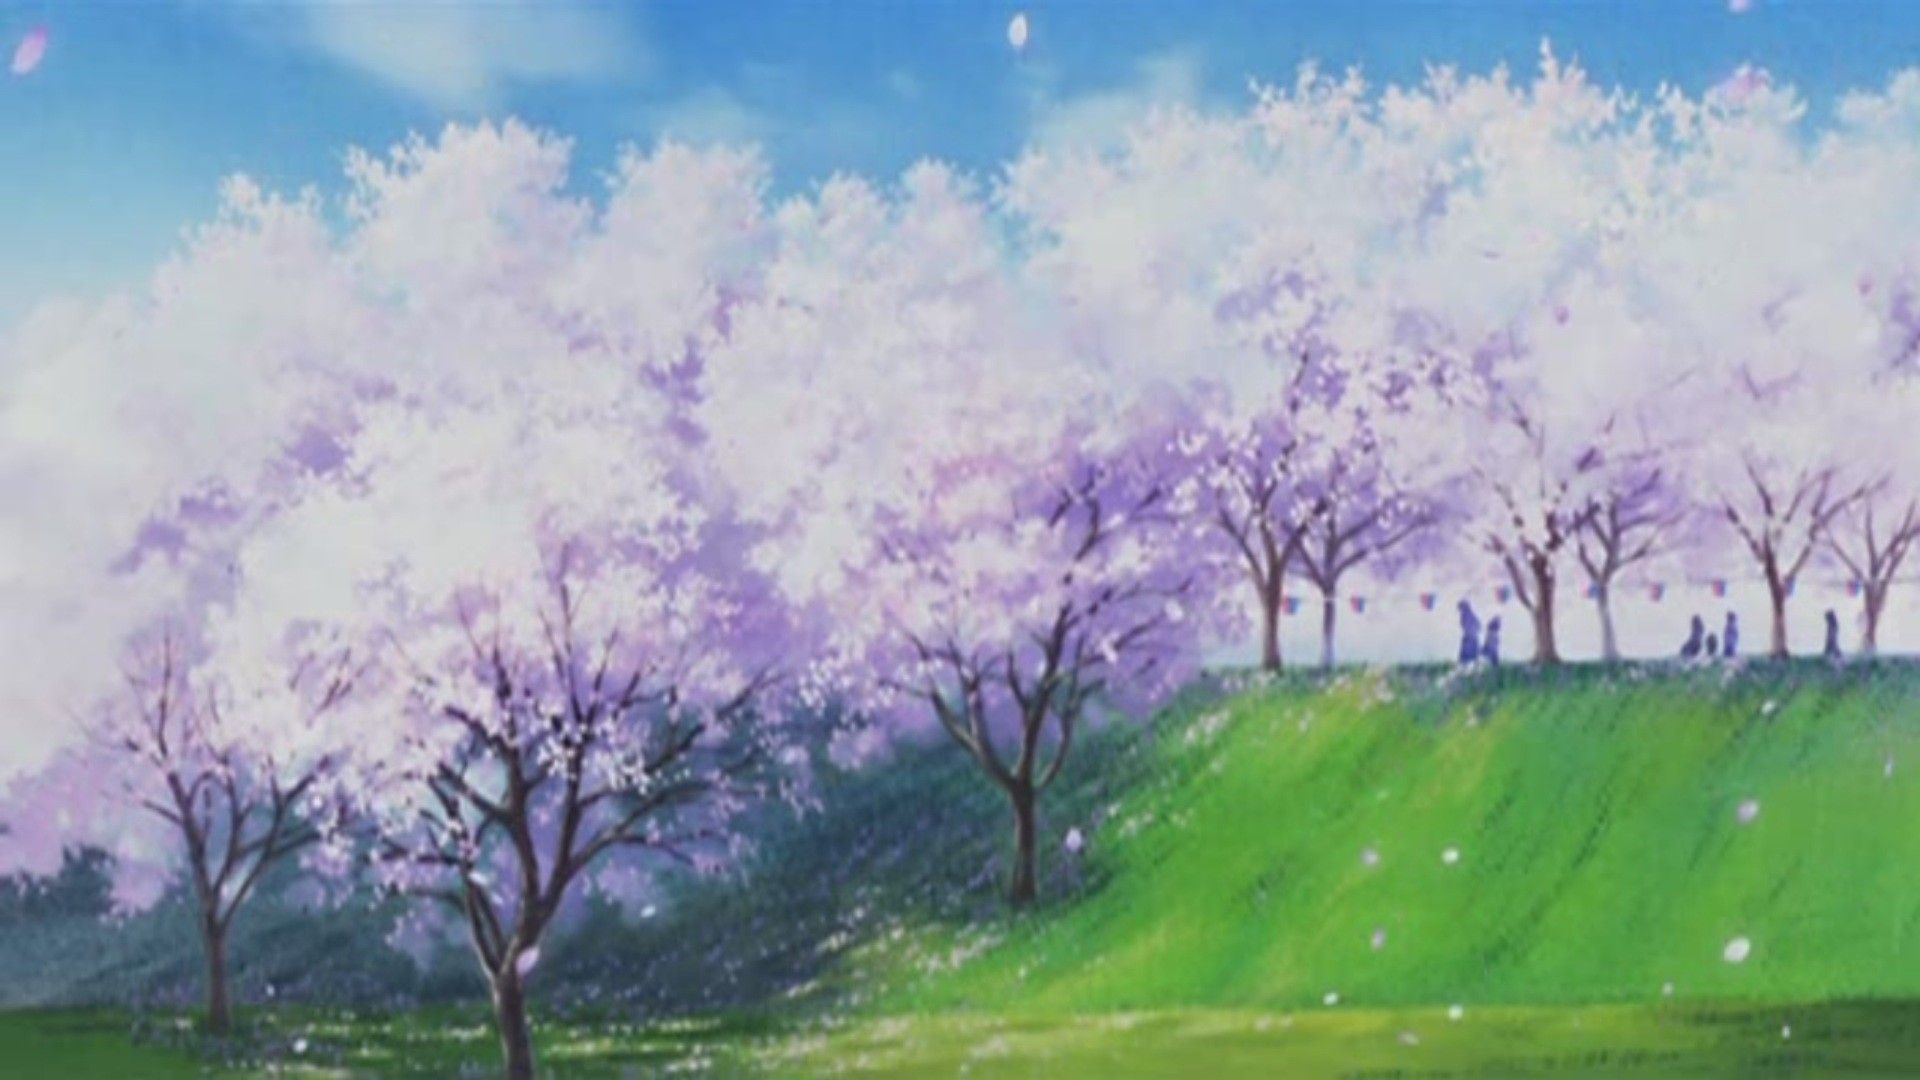 Anime Cherry Blossom Wallpaper Free Scenery Background